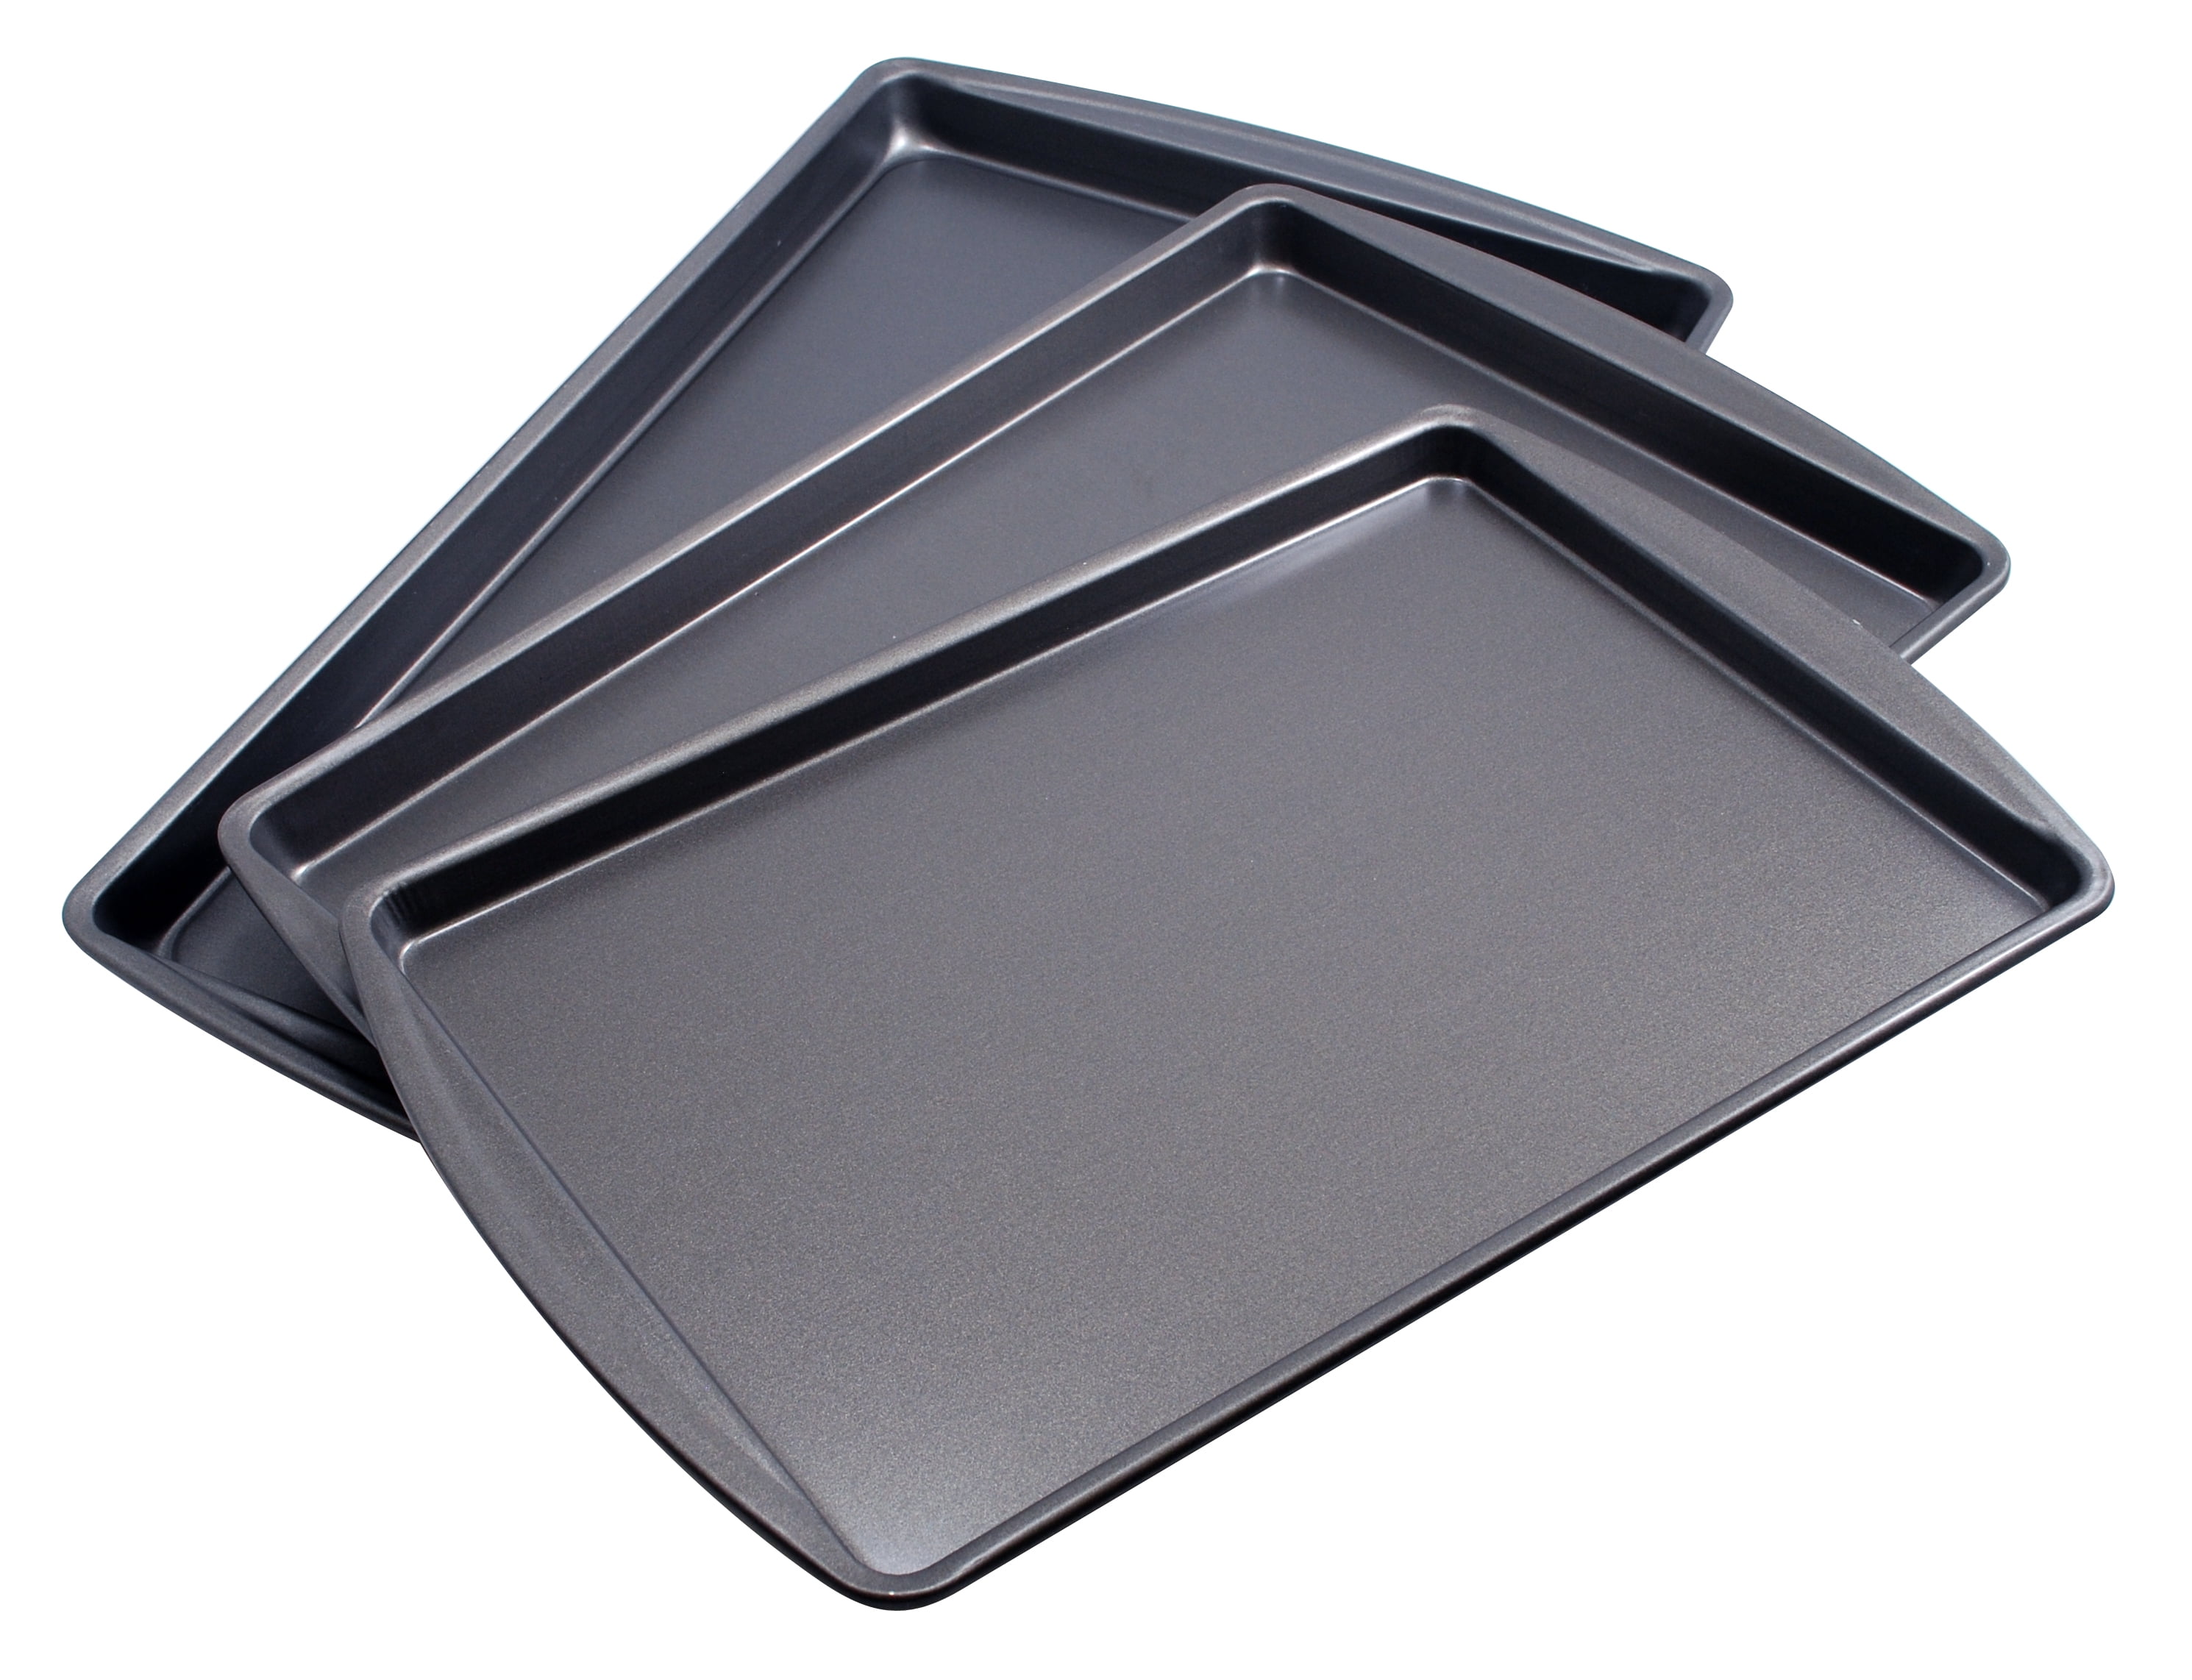 Mainstays Gray Covered Nonstick 17.3 x 12.5 x 1 Half Sheet Pan,  Multi-Purpose, Jelly Roll Pan